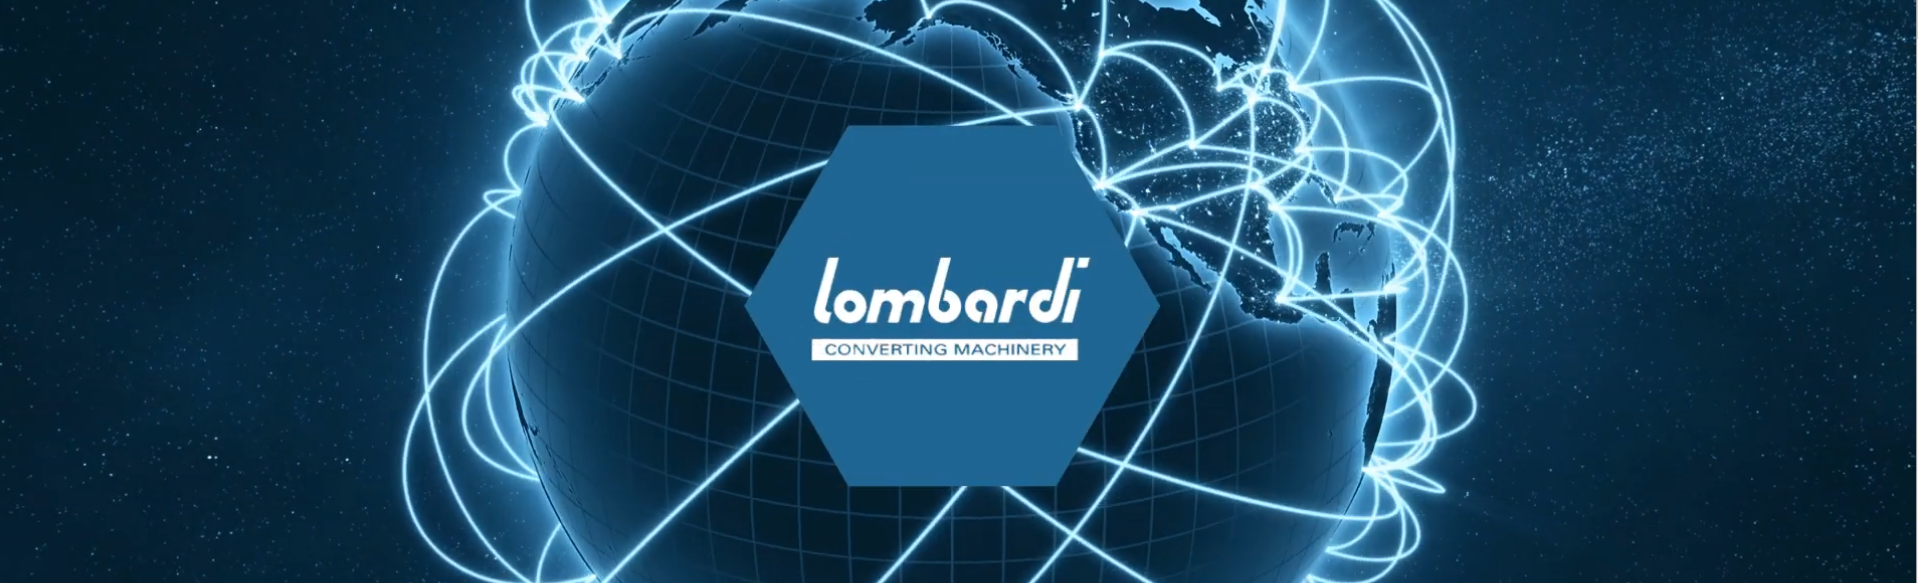 Lombardi_nyitokep